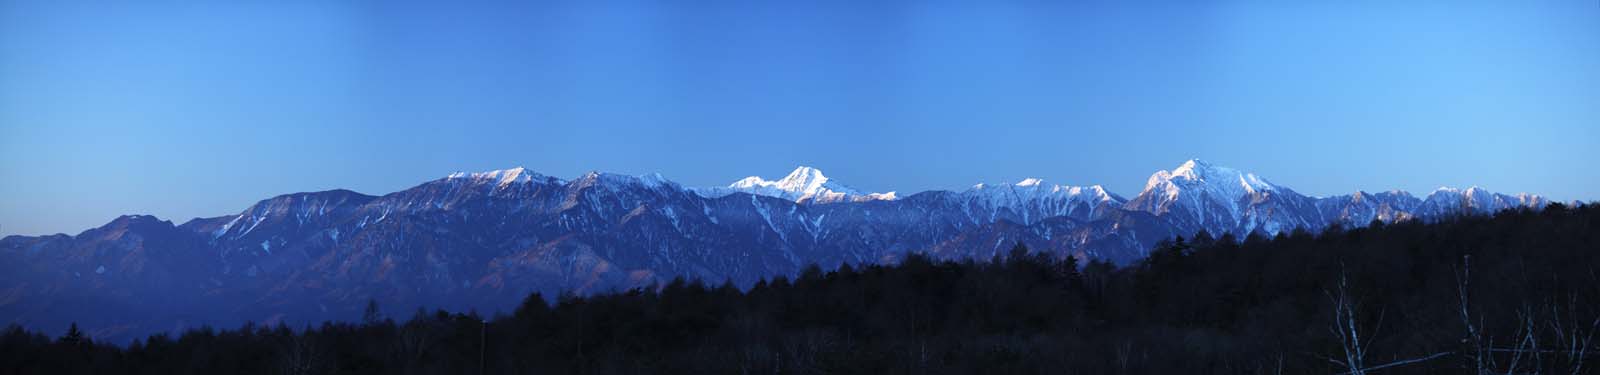 foto,tela,gratis,paisaje,fotografa,idea,Alpes opinin entera del sur, Los Alpes, Montaismo, Montaa de invierno, La nieve